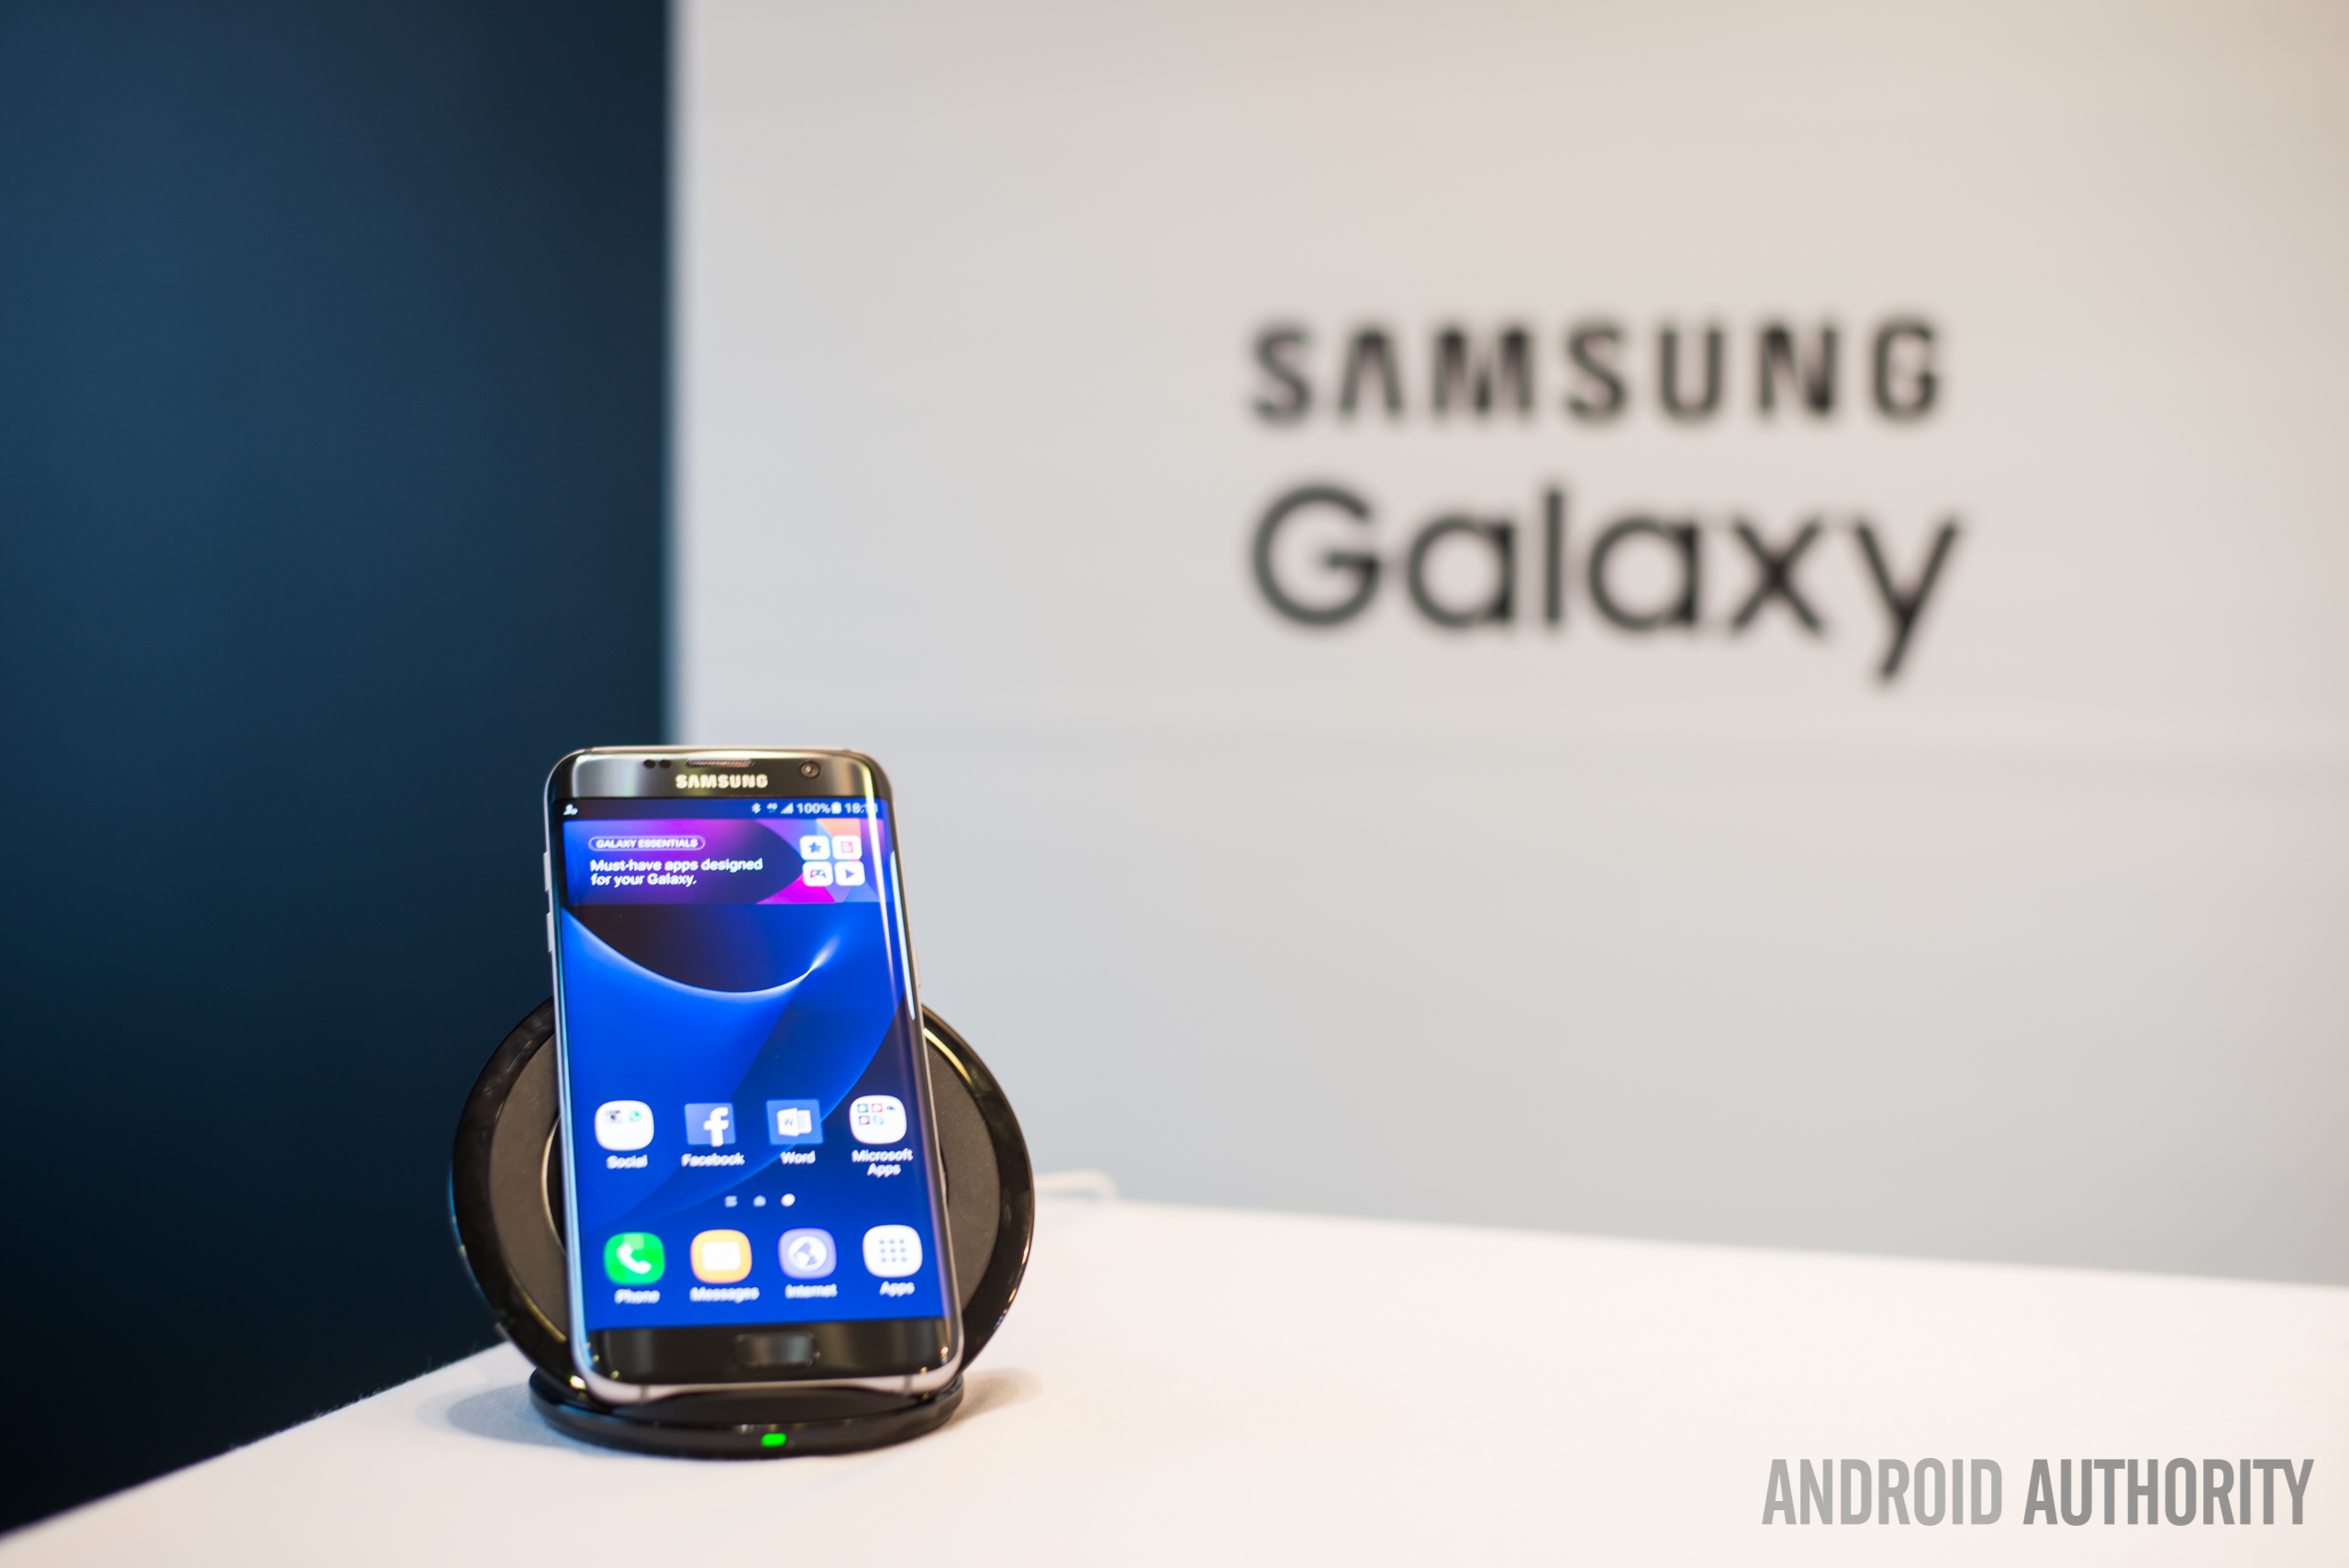 Samsung-Galaxy-S7-Edge-1